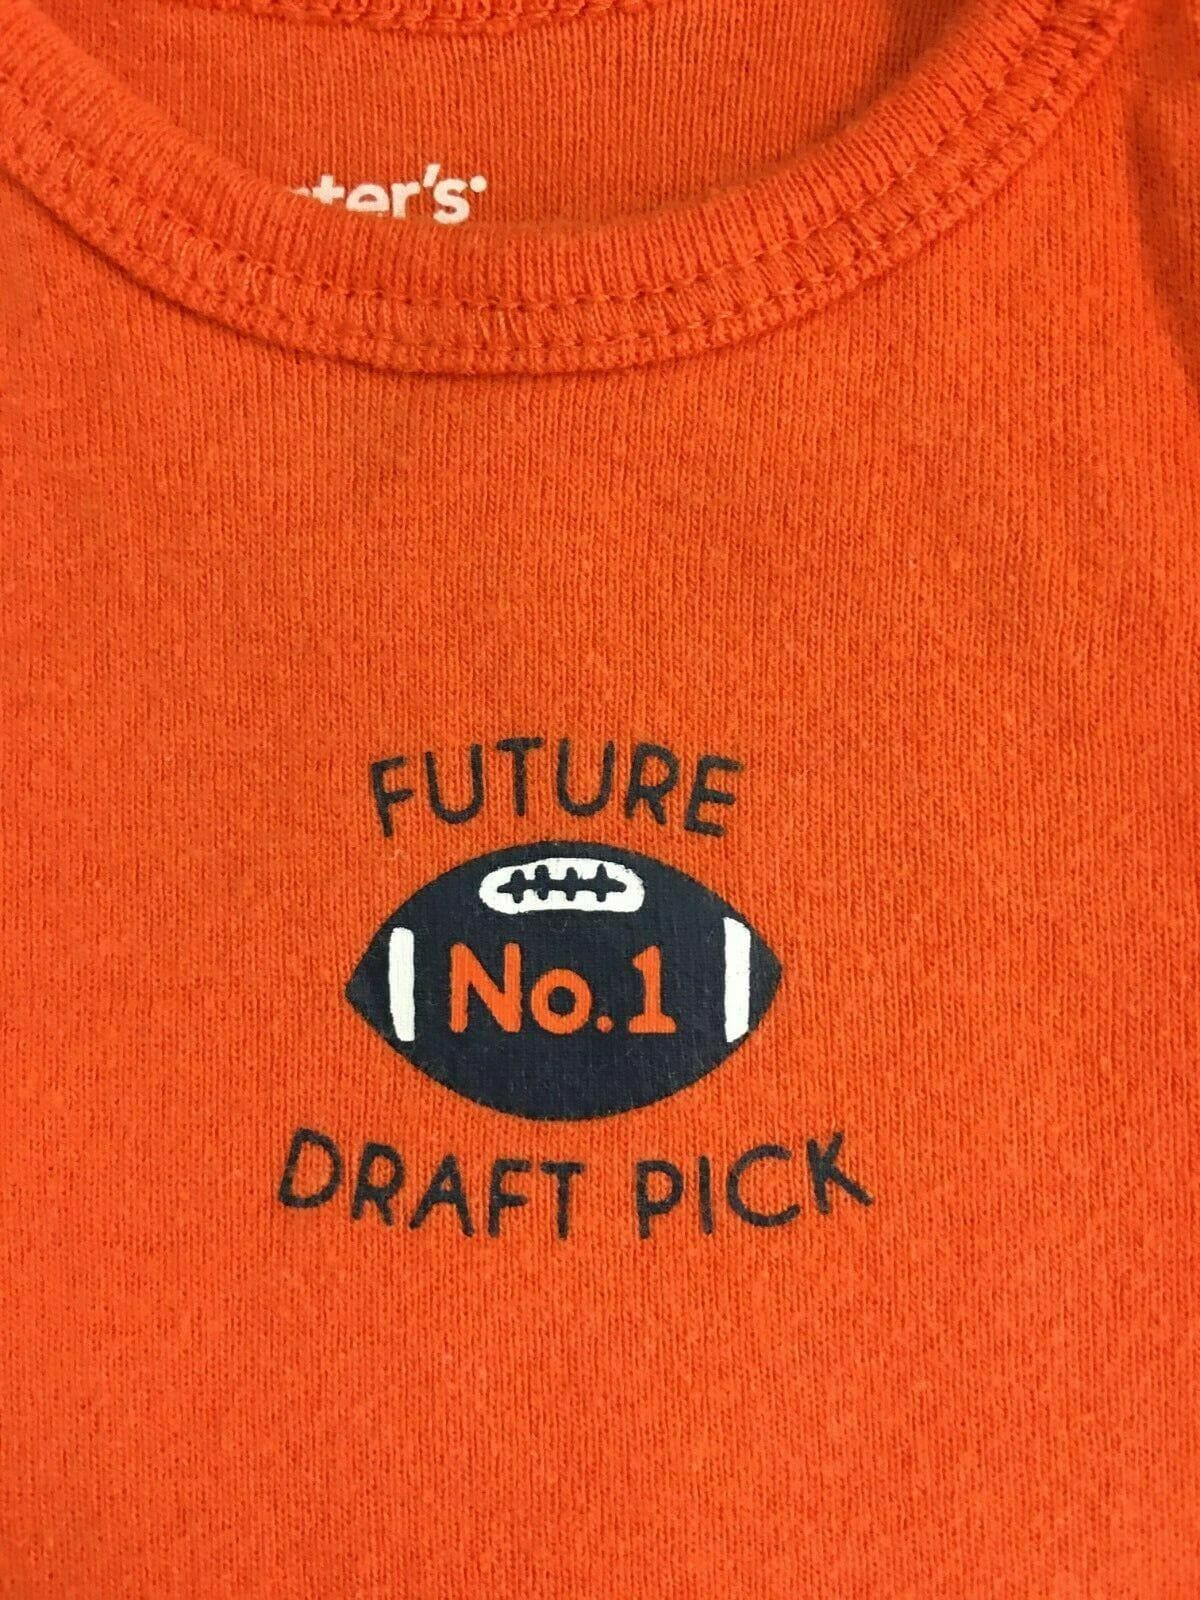 American Football "Future #1 Draft Pick" Bodysuit/Vest 3 Months